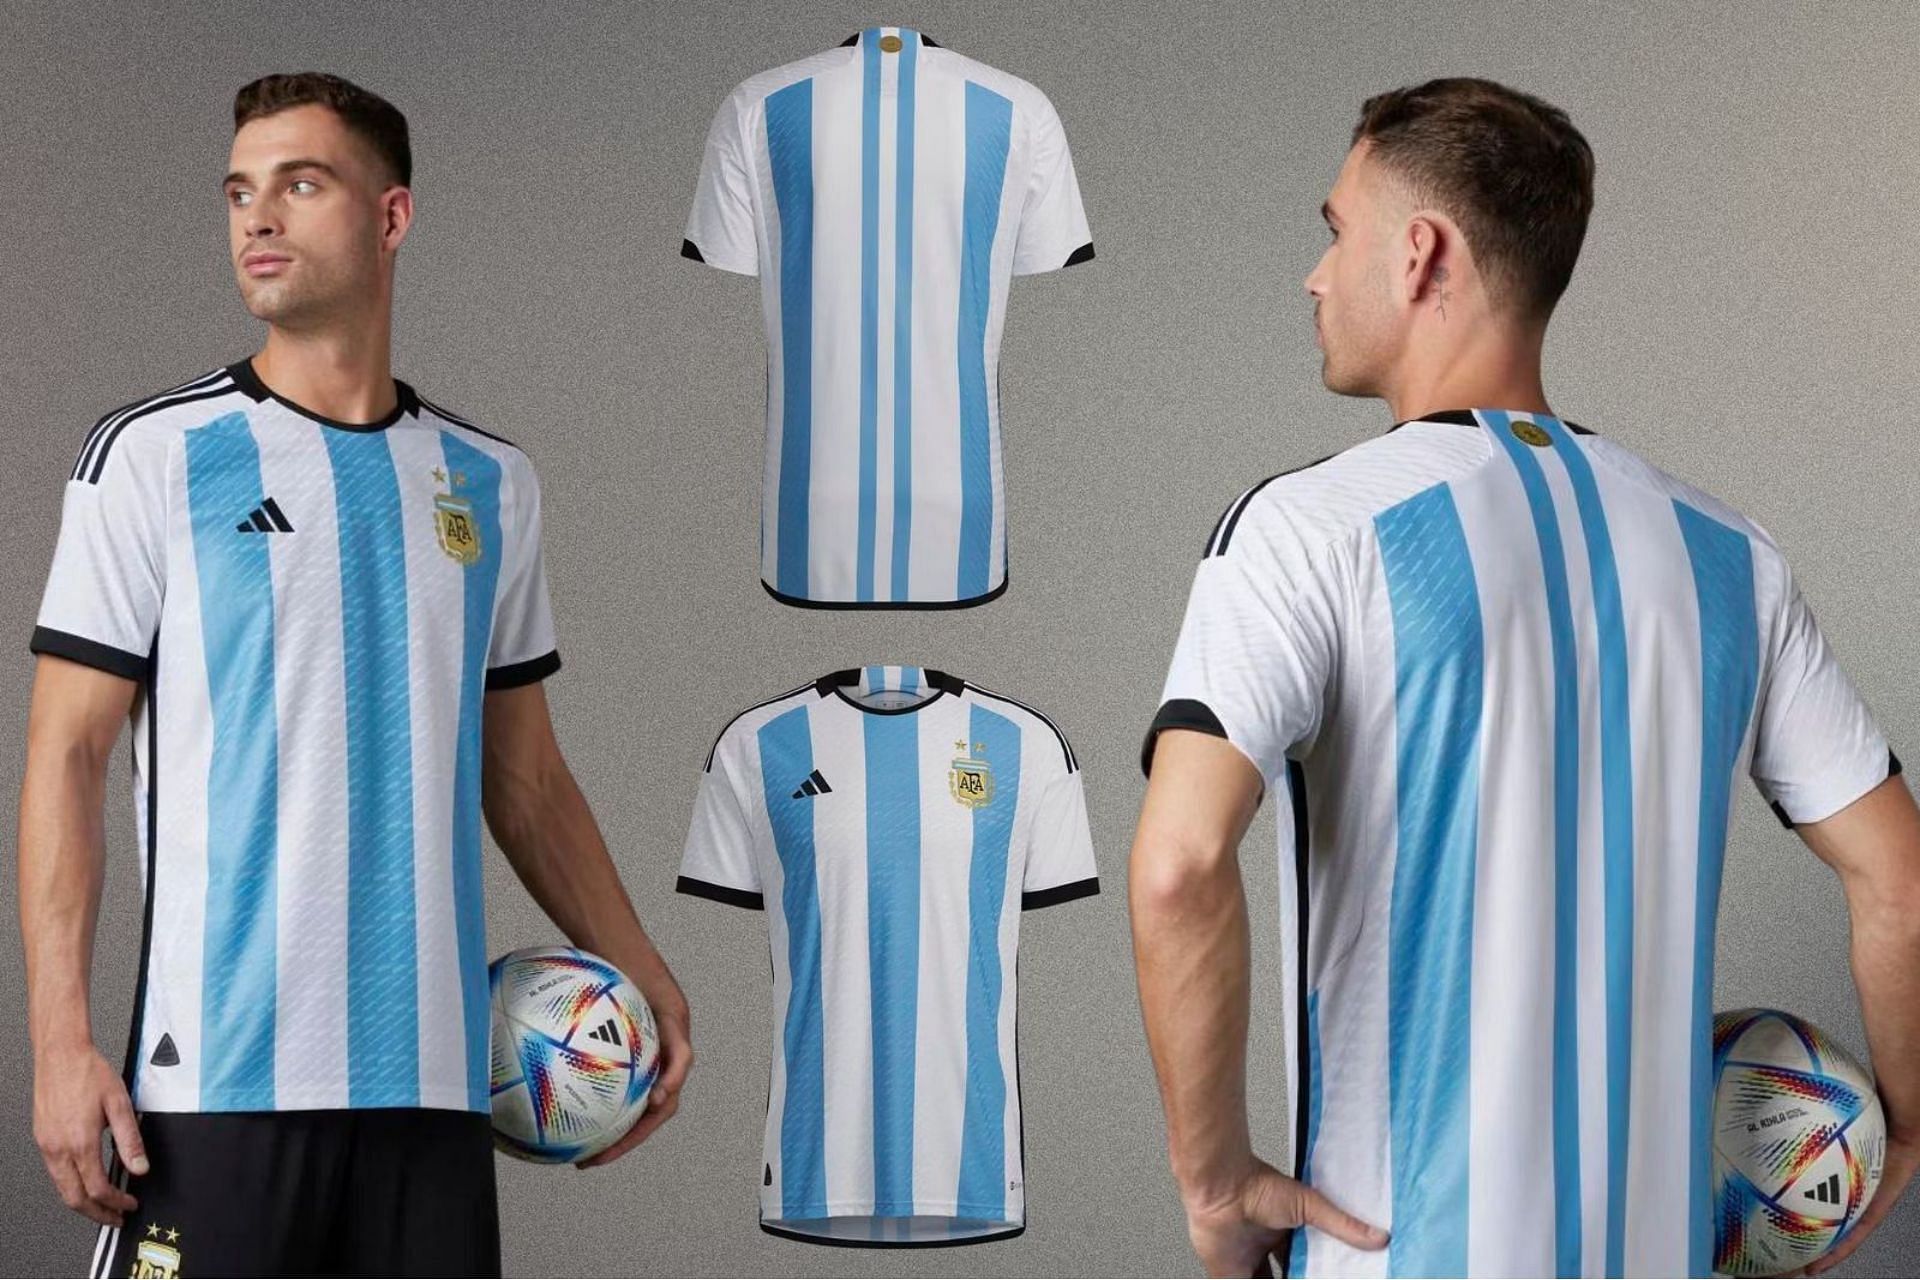 argentina national team jersey